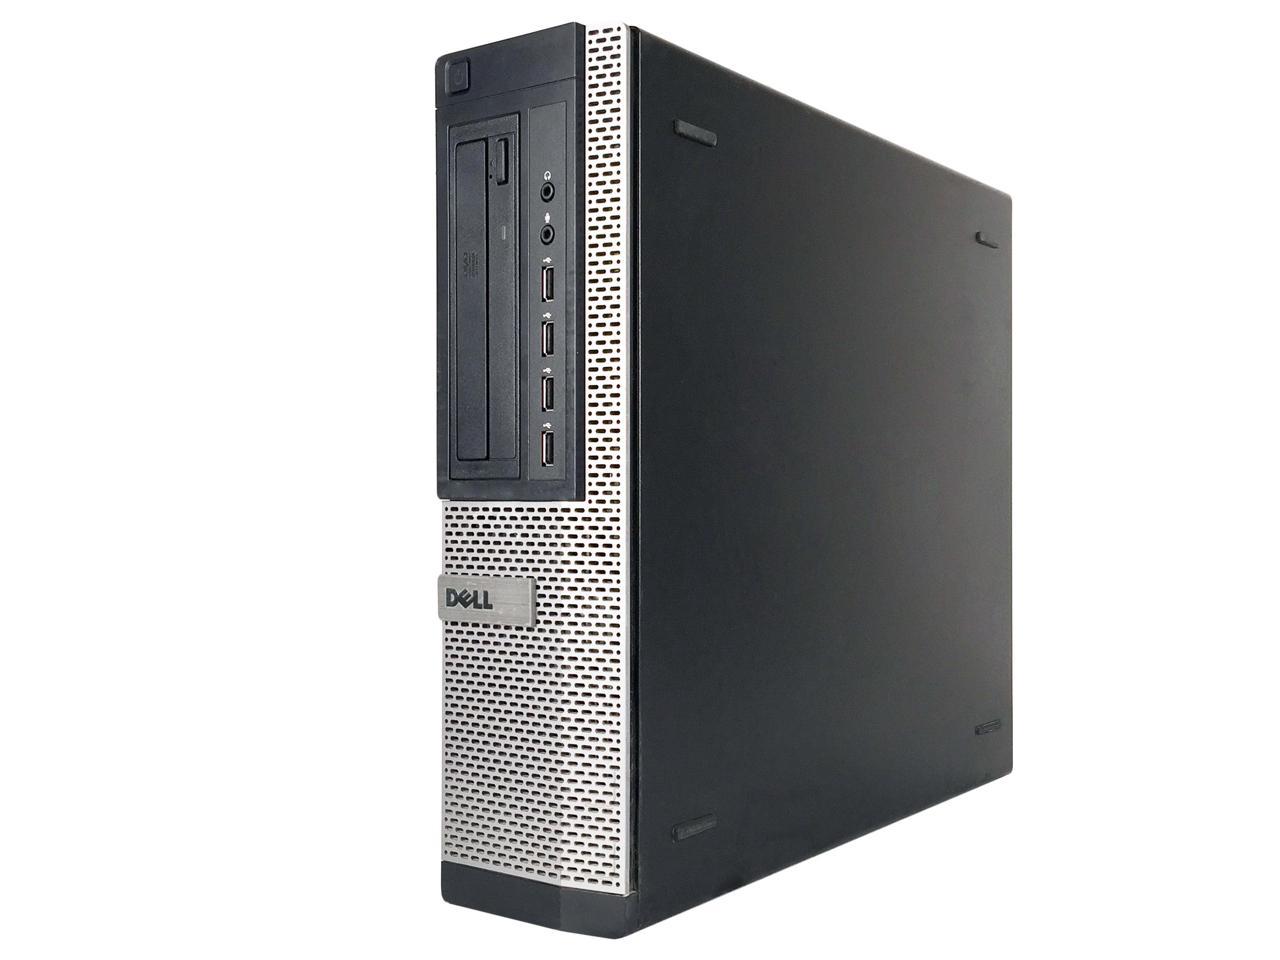 Refurbished Dell Grade A OptiPlex 990 Desktop Computer, Intel Core I5-2500 (3.3 GHz), 16G DDR3, 320G HDD, DVD, WIFI, Windows 10 Home 64-bit (English/Spanish), 1 Year Warranty